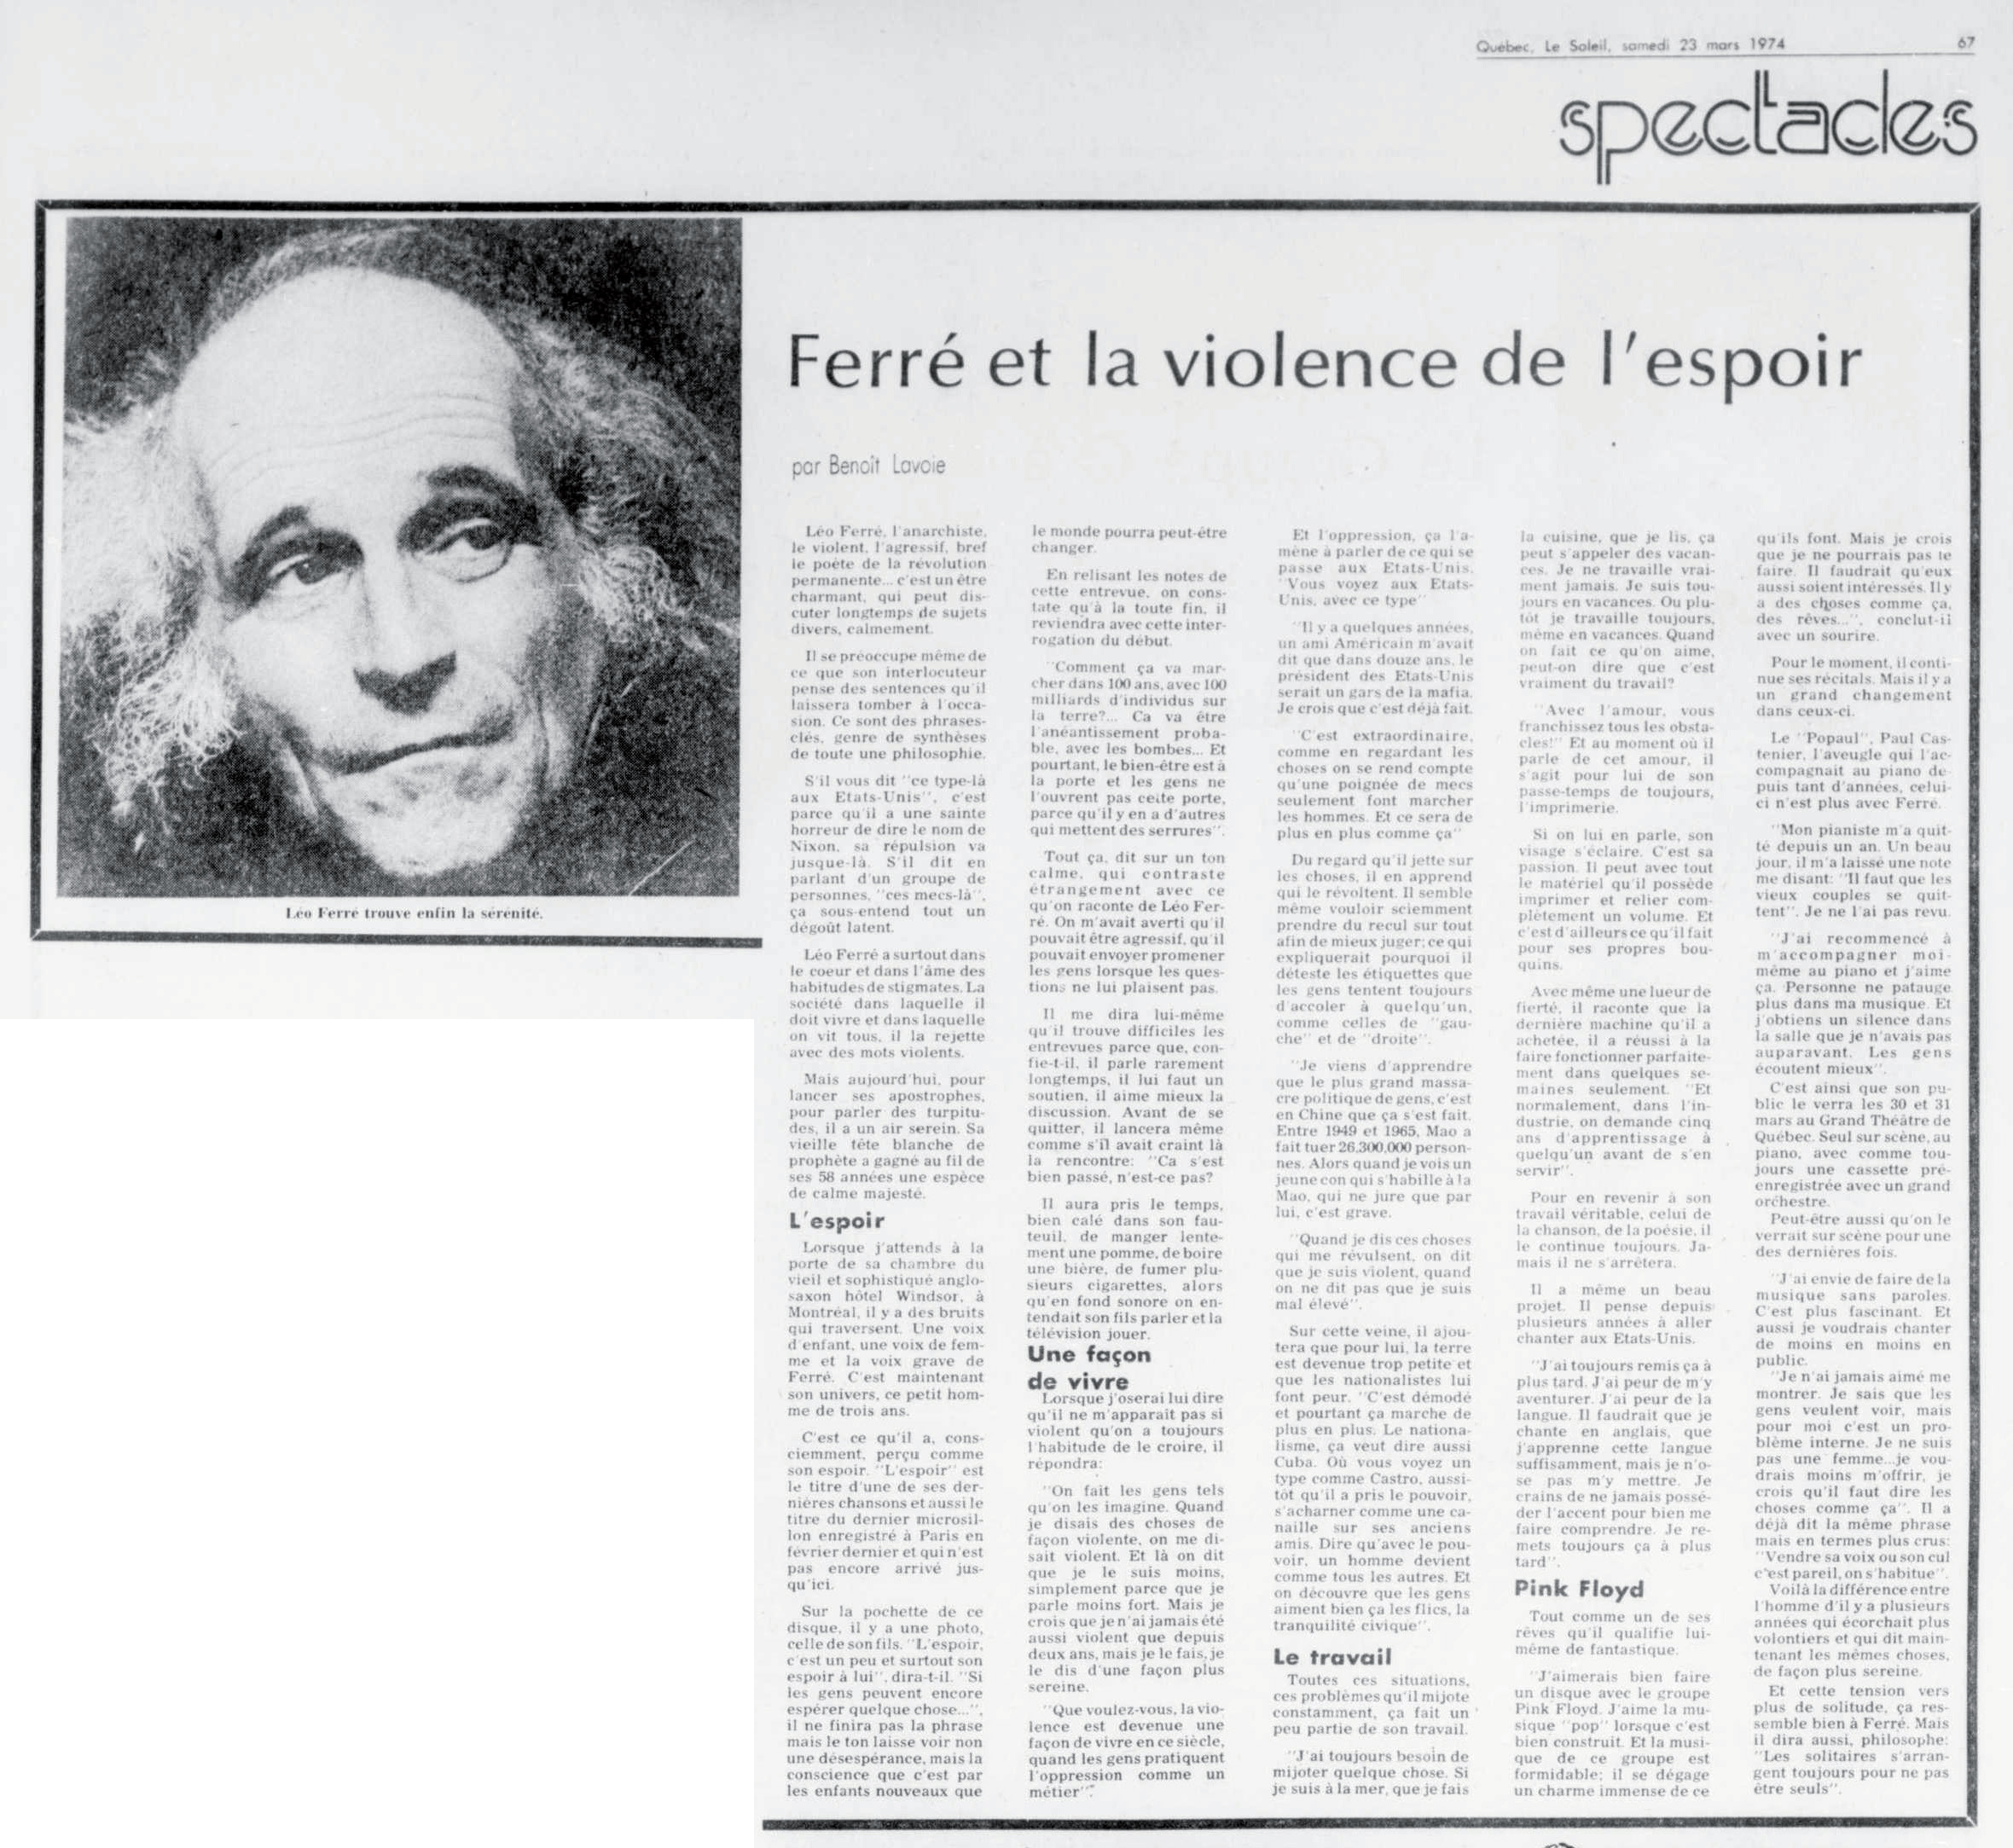 Léo Ferré - Le soleil, 1896- (Québec), samedi 23 mars 1974